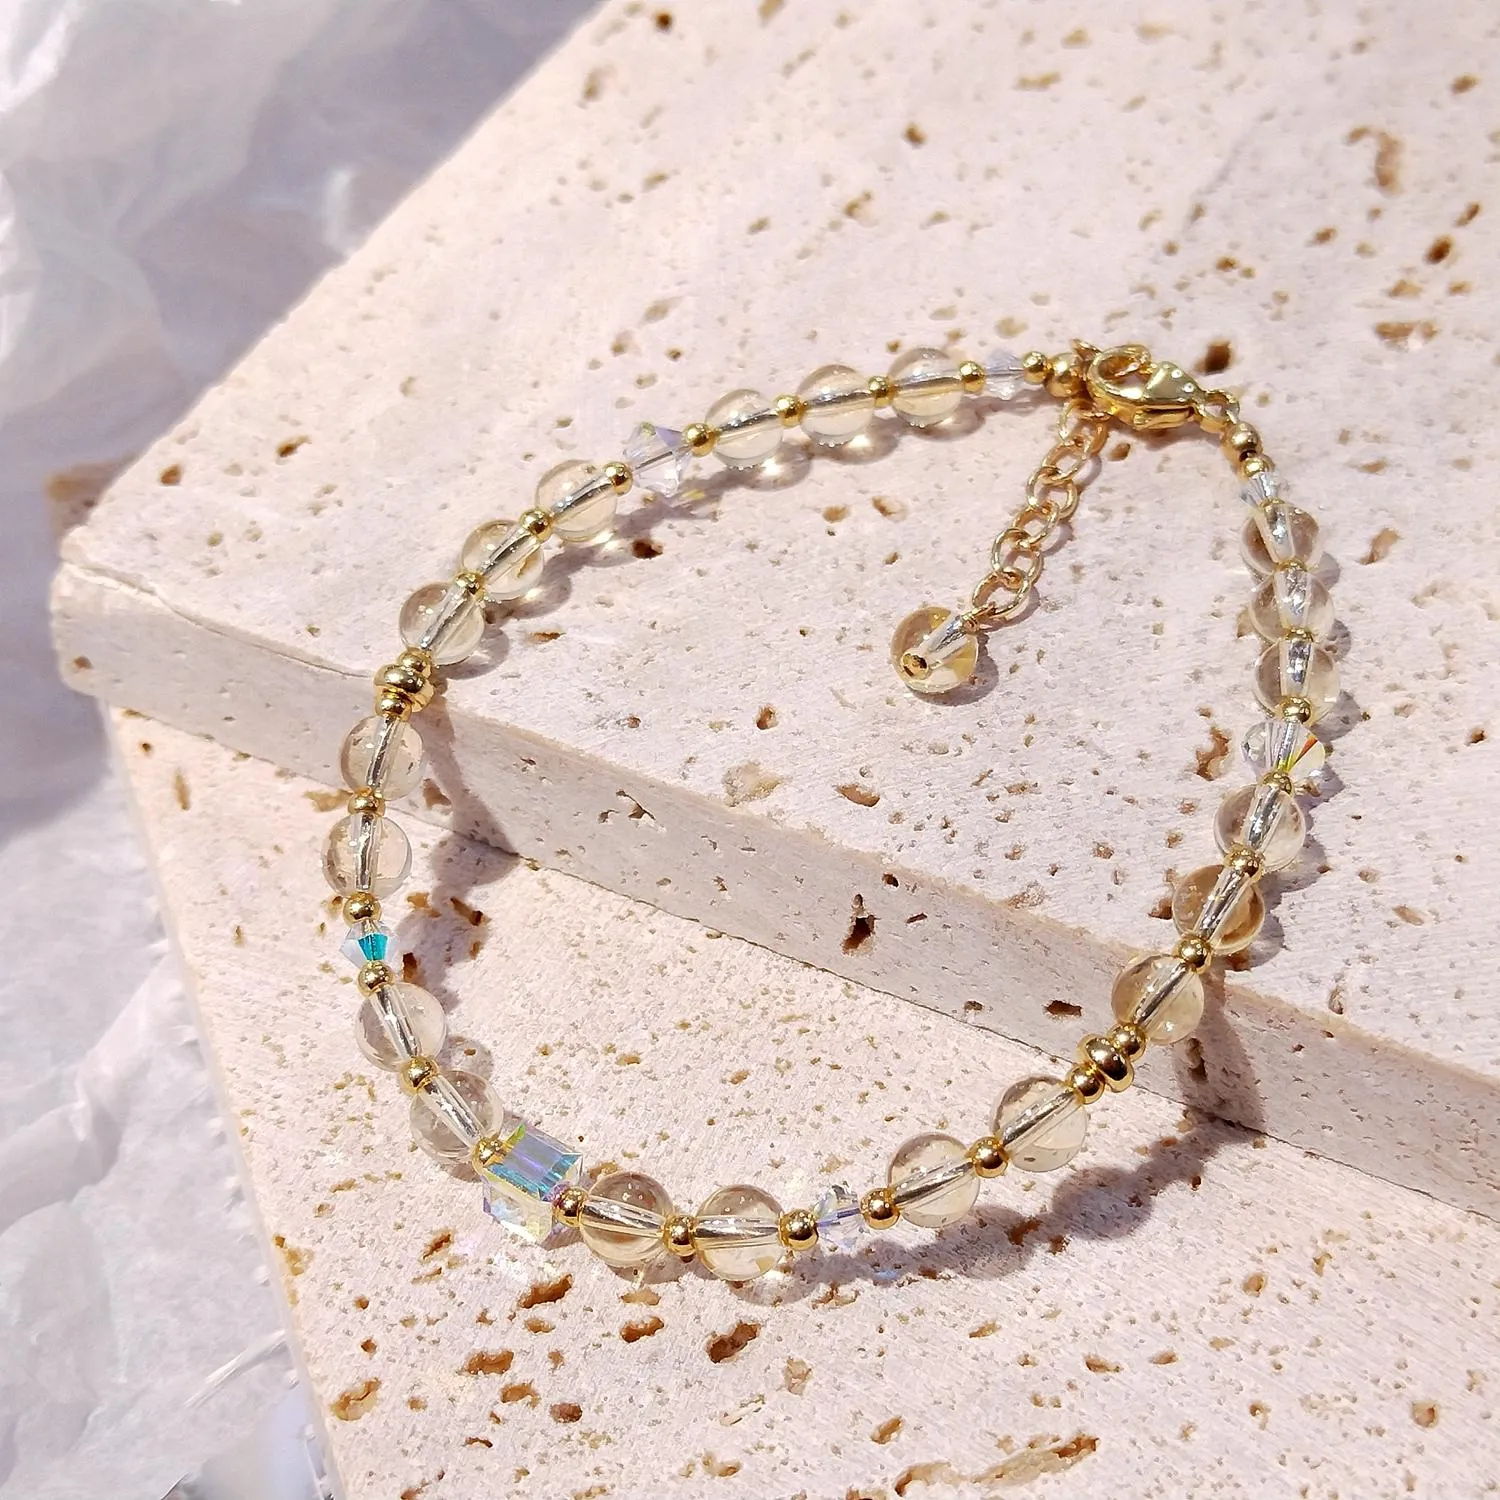 Bangle Lii Ji Citrine Austrian Crystal 14K Gold Filled Bracelet 17+3cm Natural 4mm Stone Handmade Jewelry For Women Gift